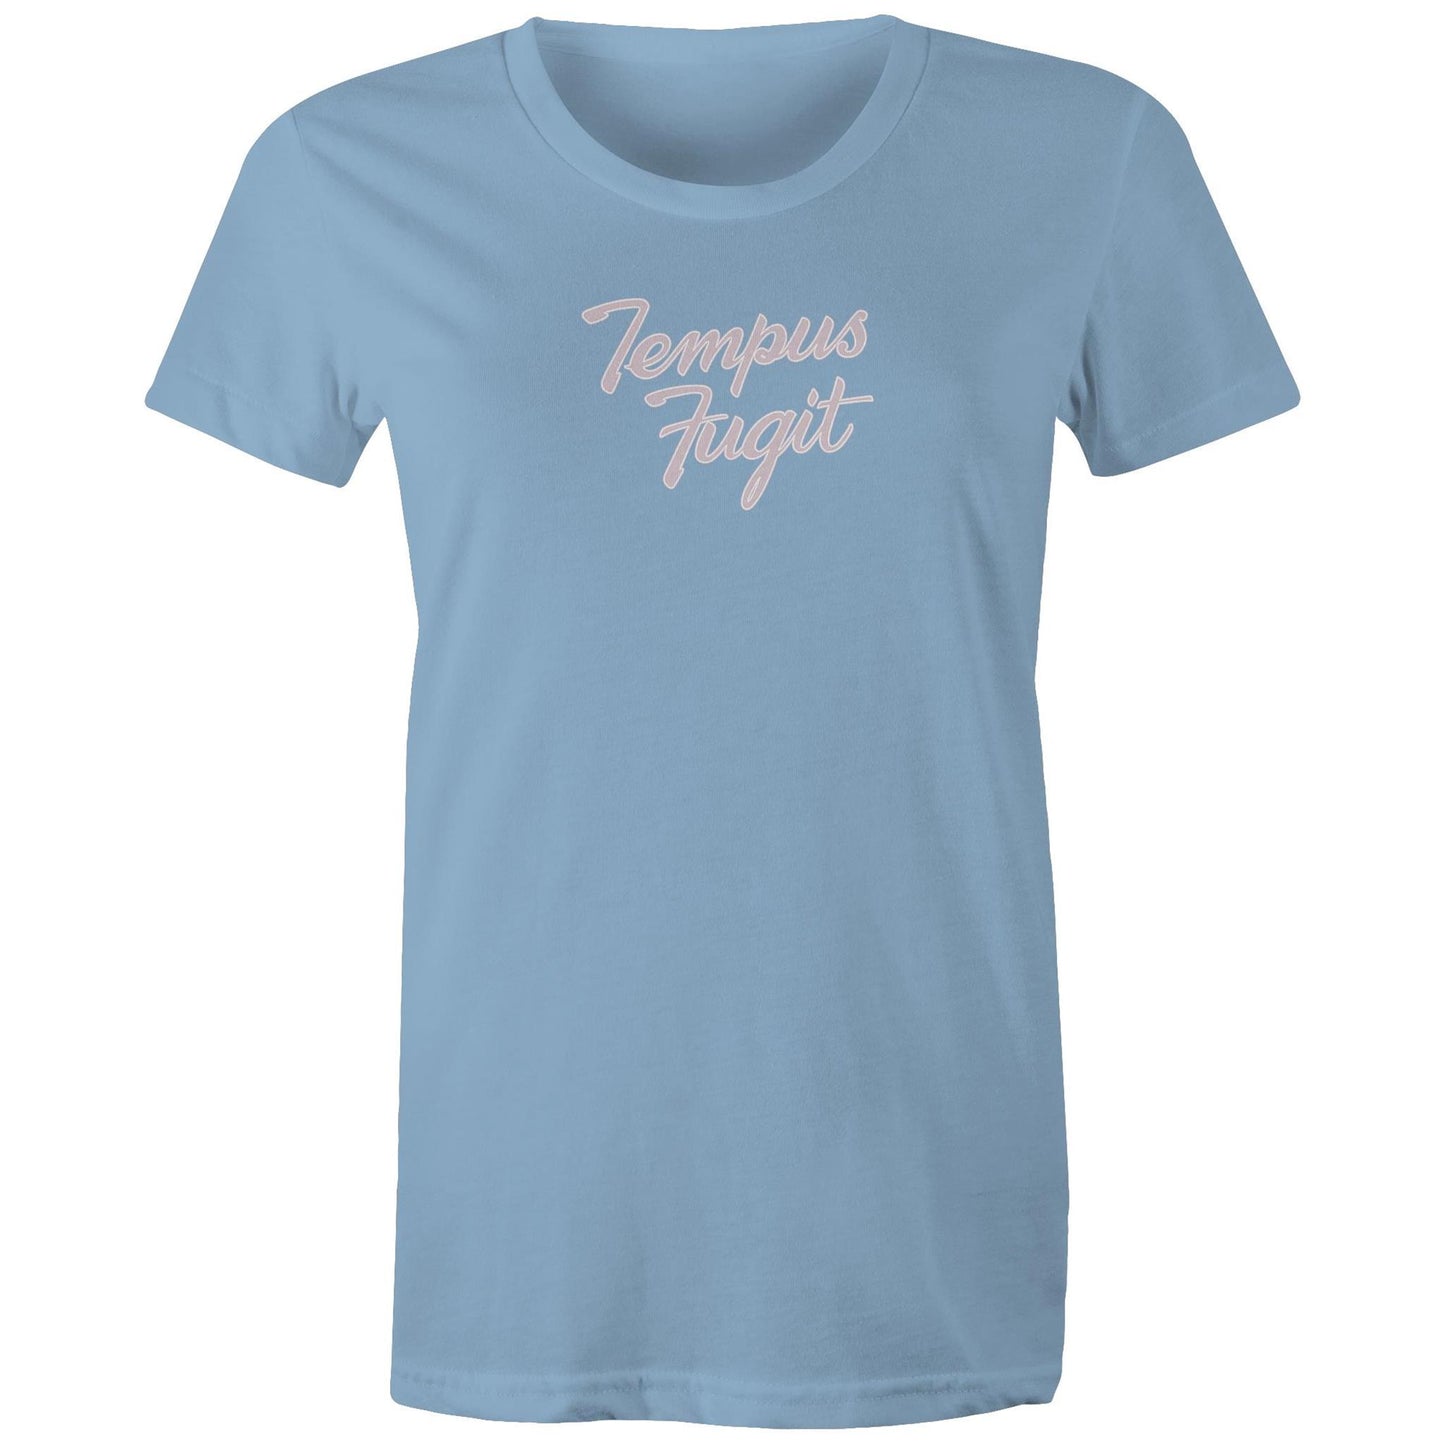 Tempus Fugit T Shirts for Women